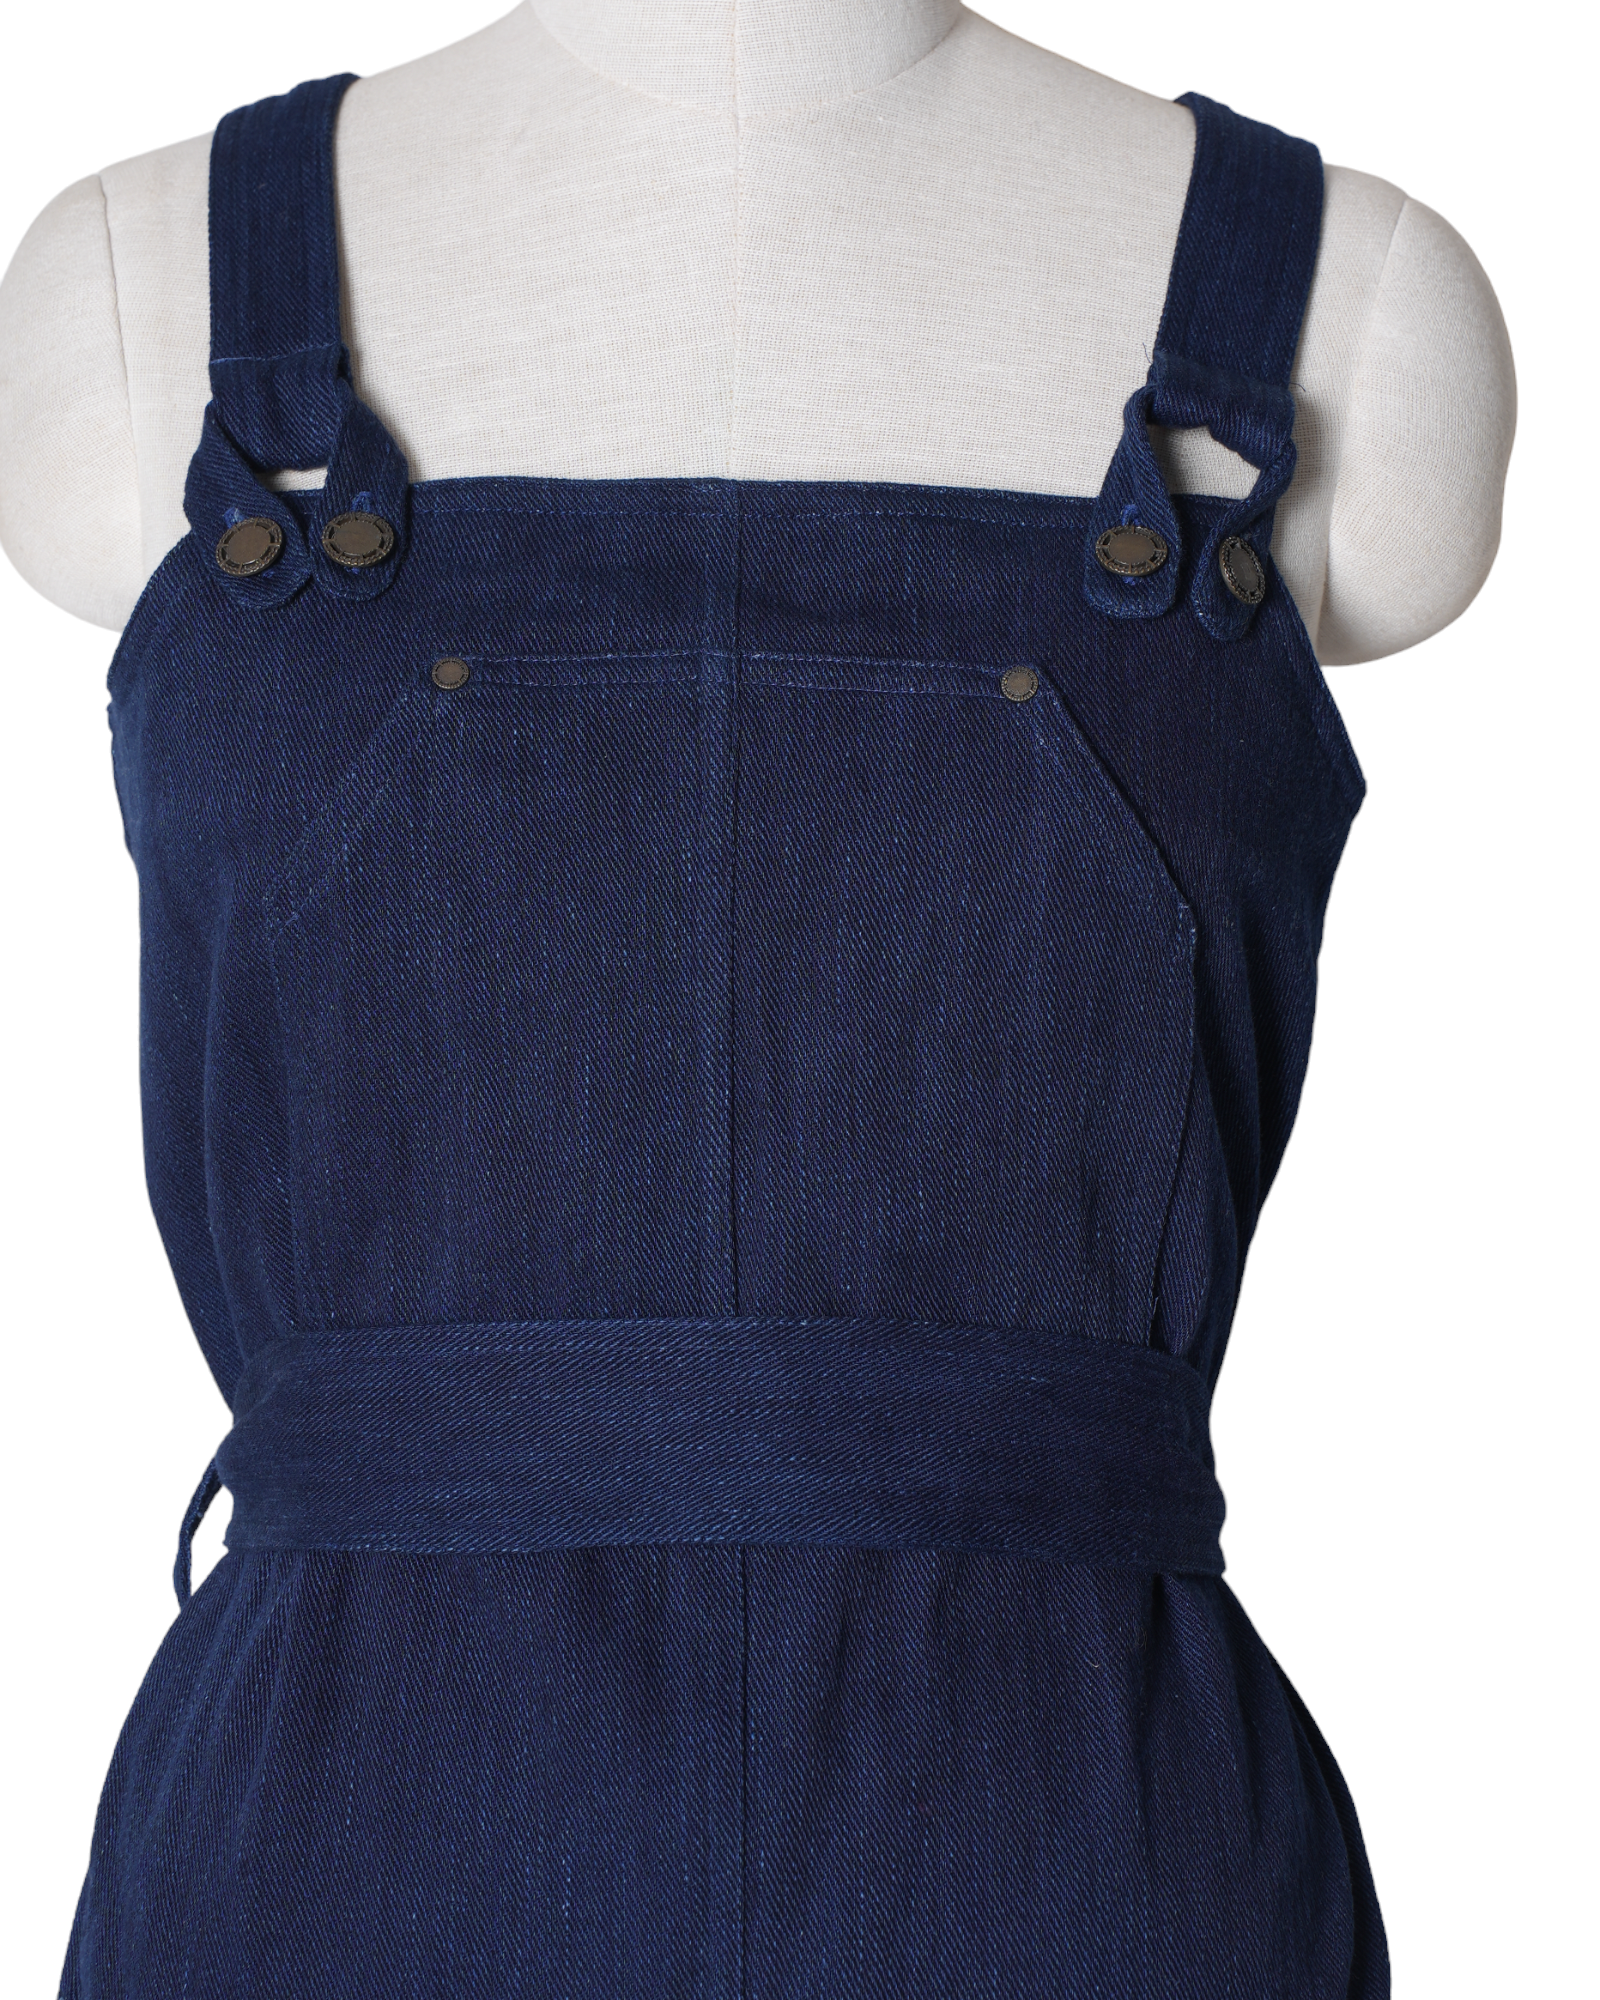 Buy Allegra K Women's Classic Denim Adjustable Strap Pinafore Overall Dress  Suspender Skirt, Light Blue, Medium at Amazon.in